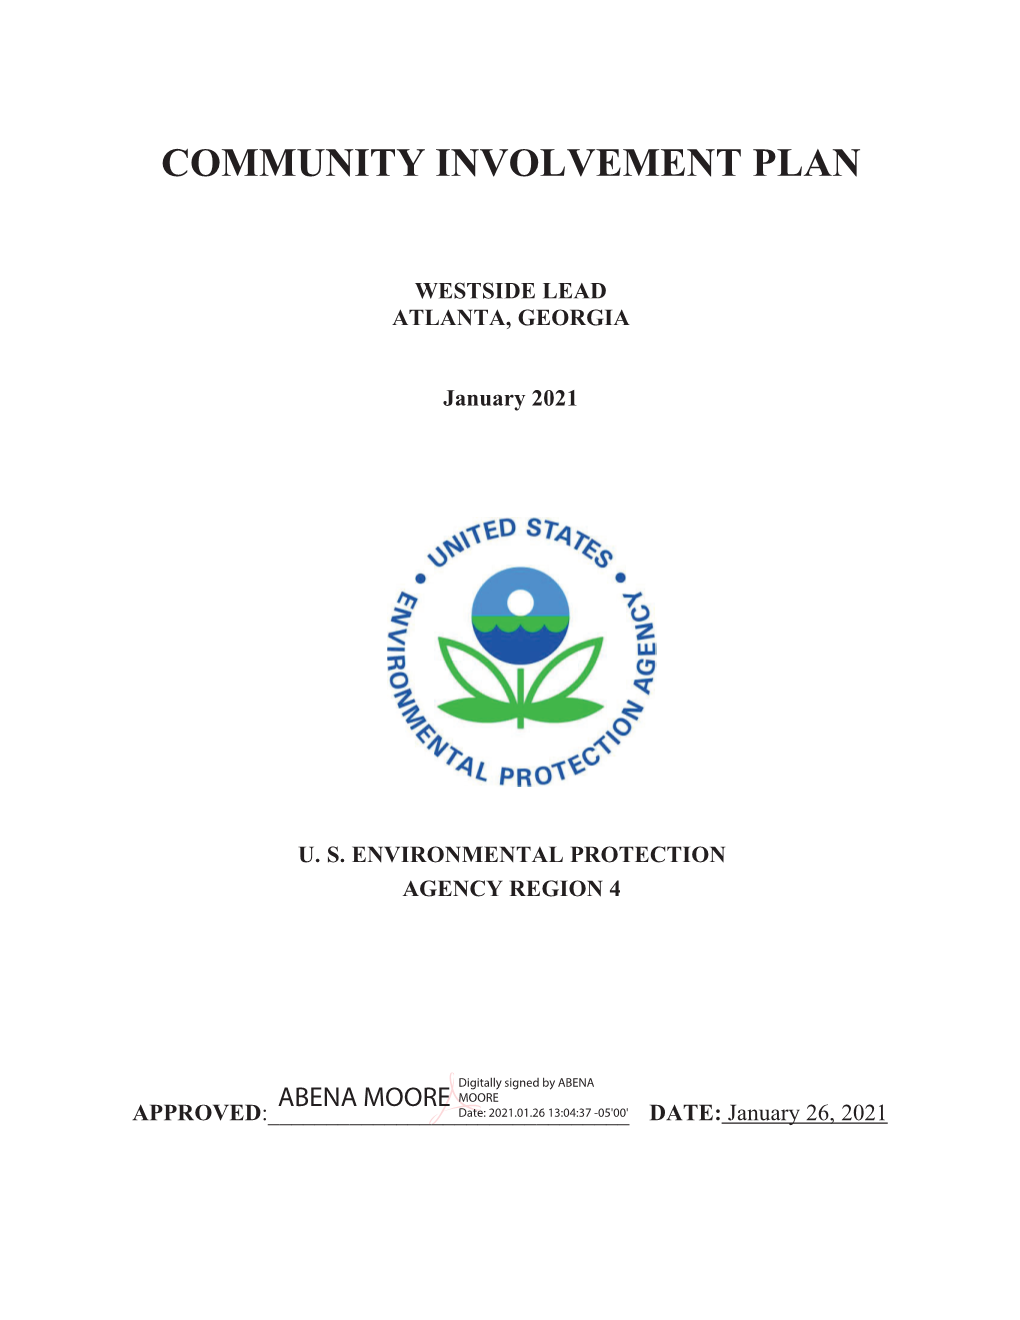 Community Involvement Plan, Westside Lead, Atlanta